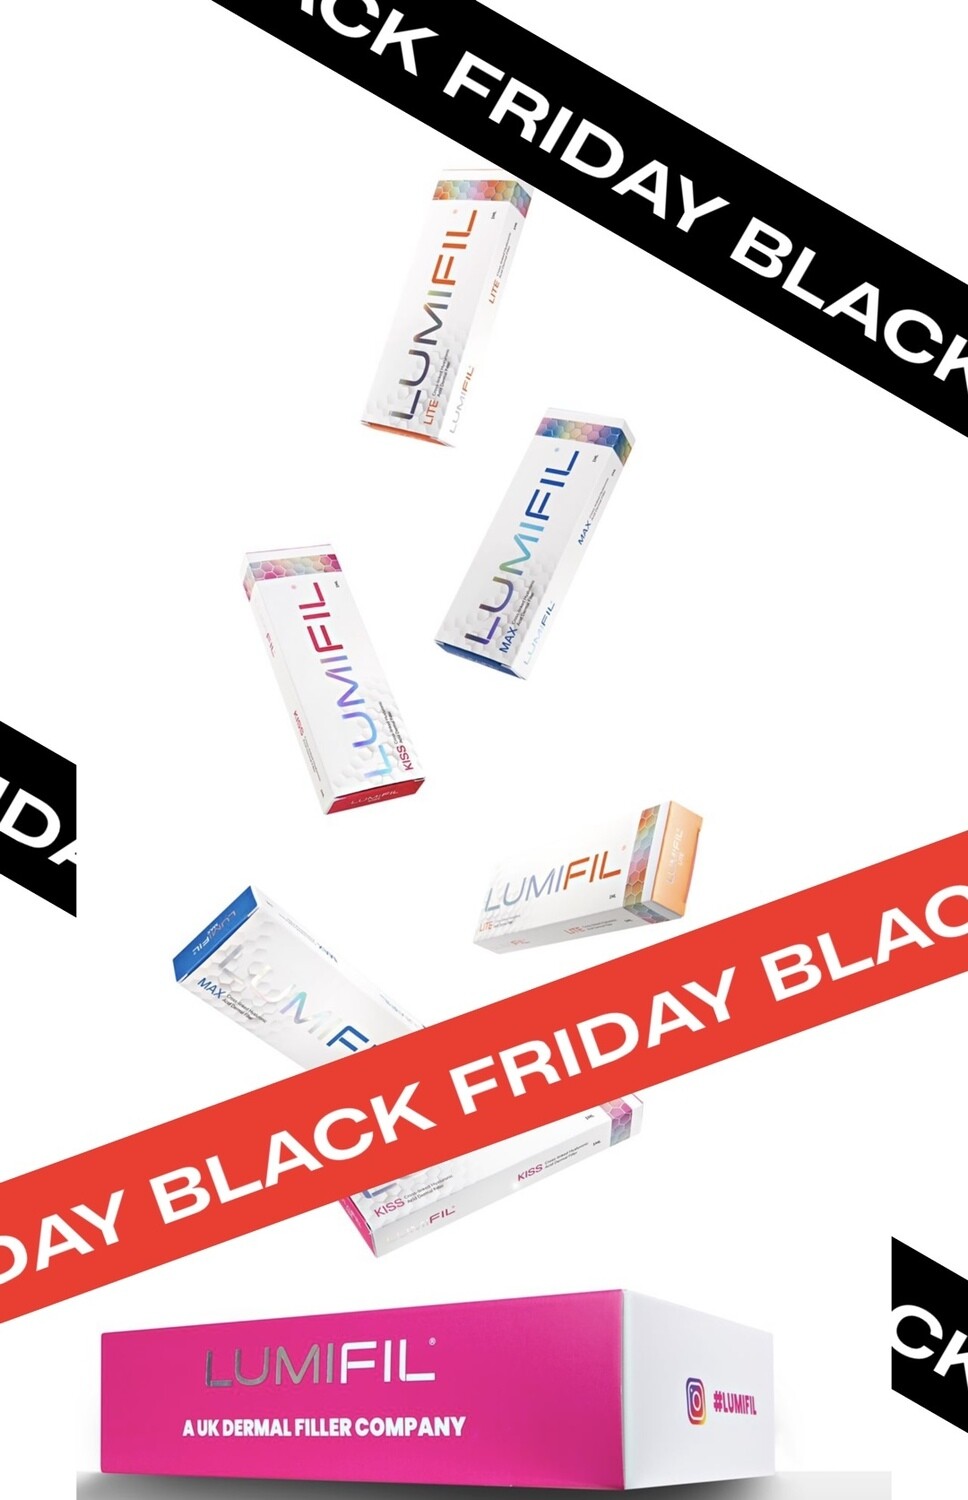 Lumifil Bundle Black Friday Deals 
(30-39 products)